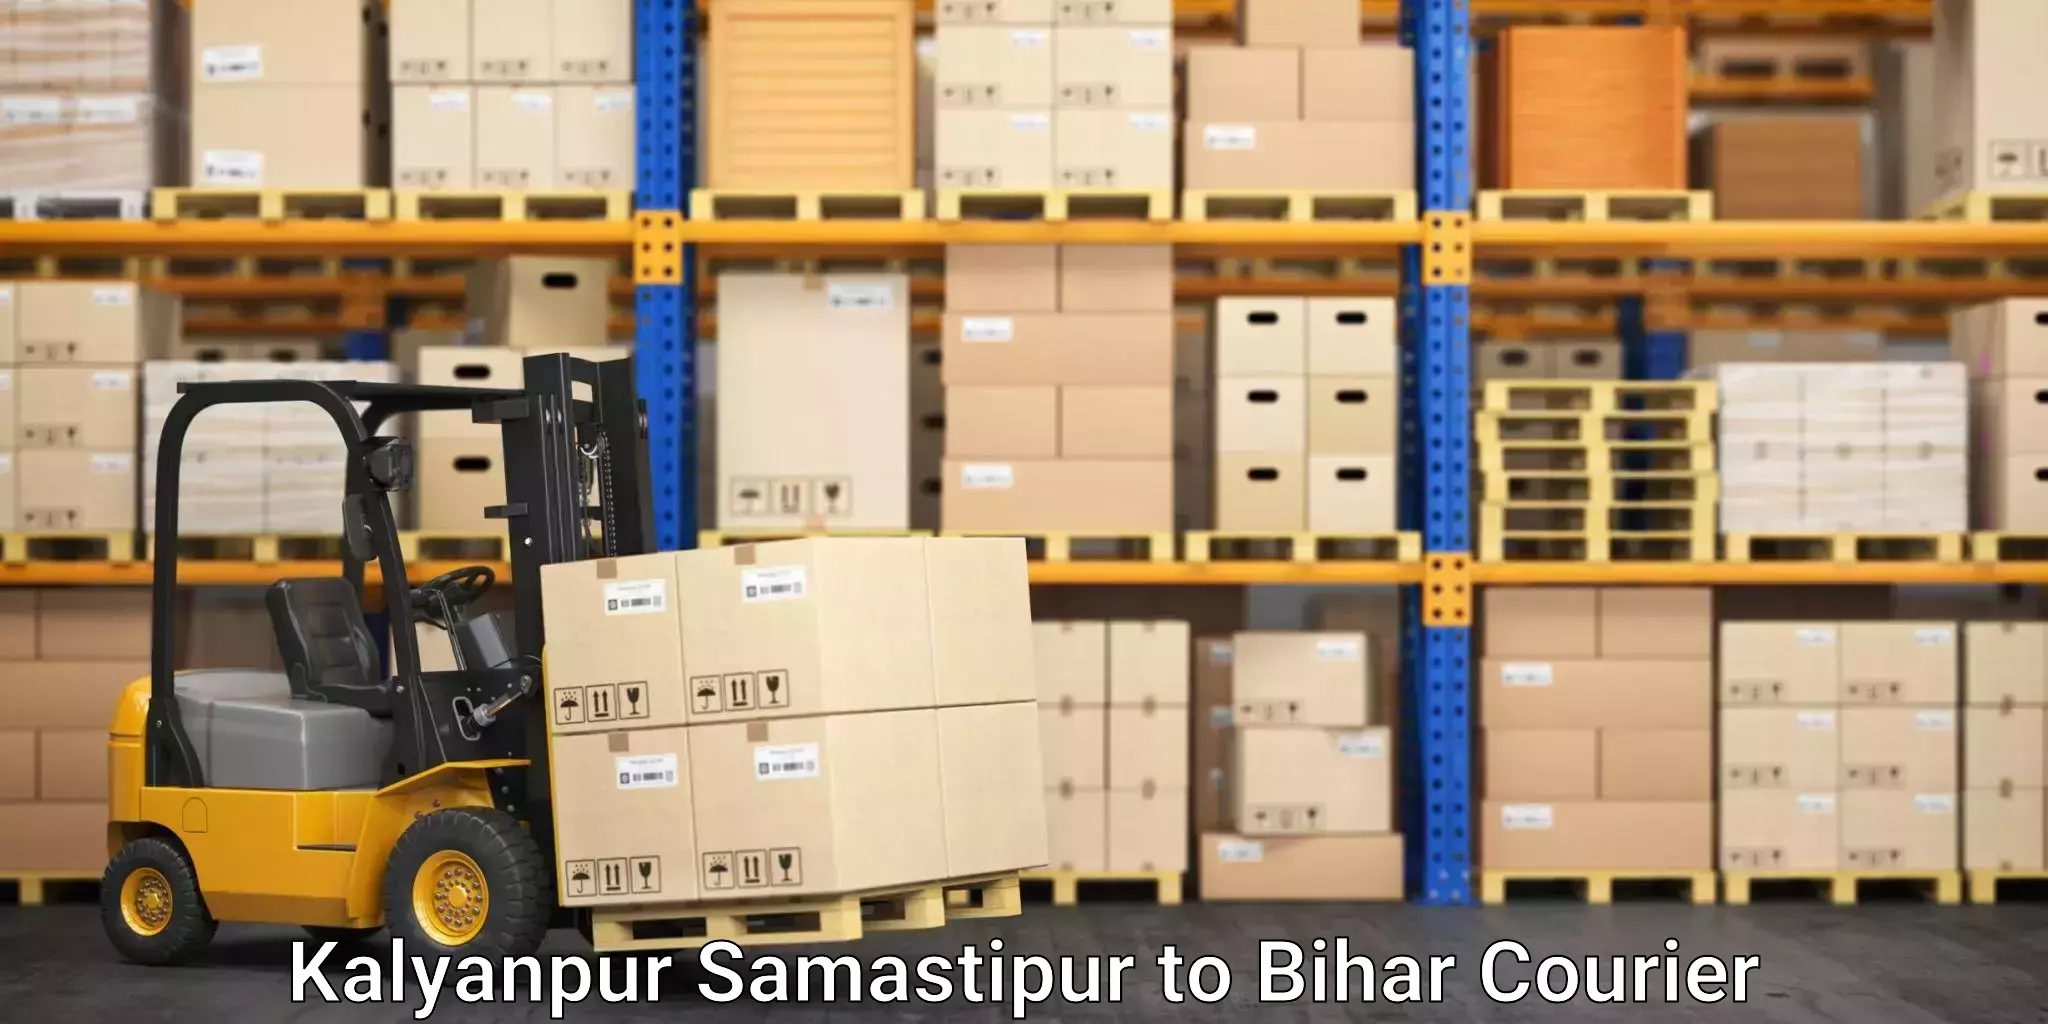 Professional moving company Kalyanpur Samastipur to Bihar